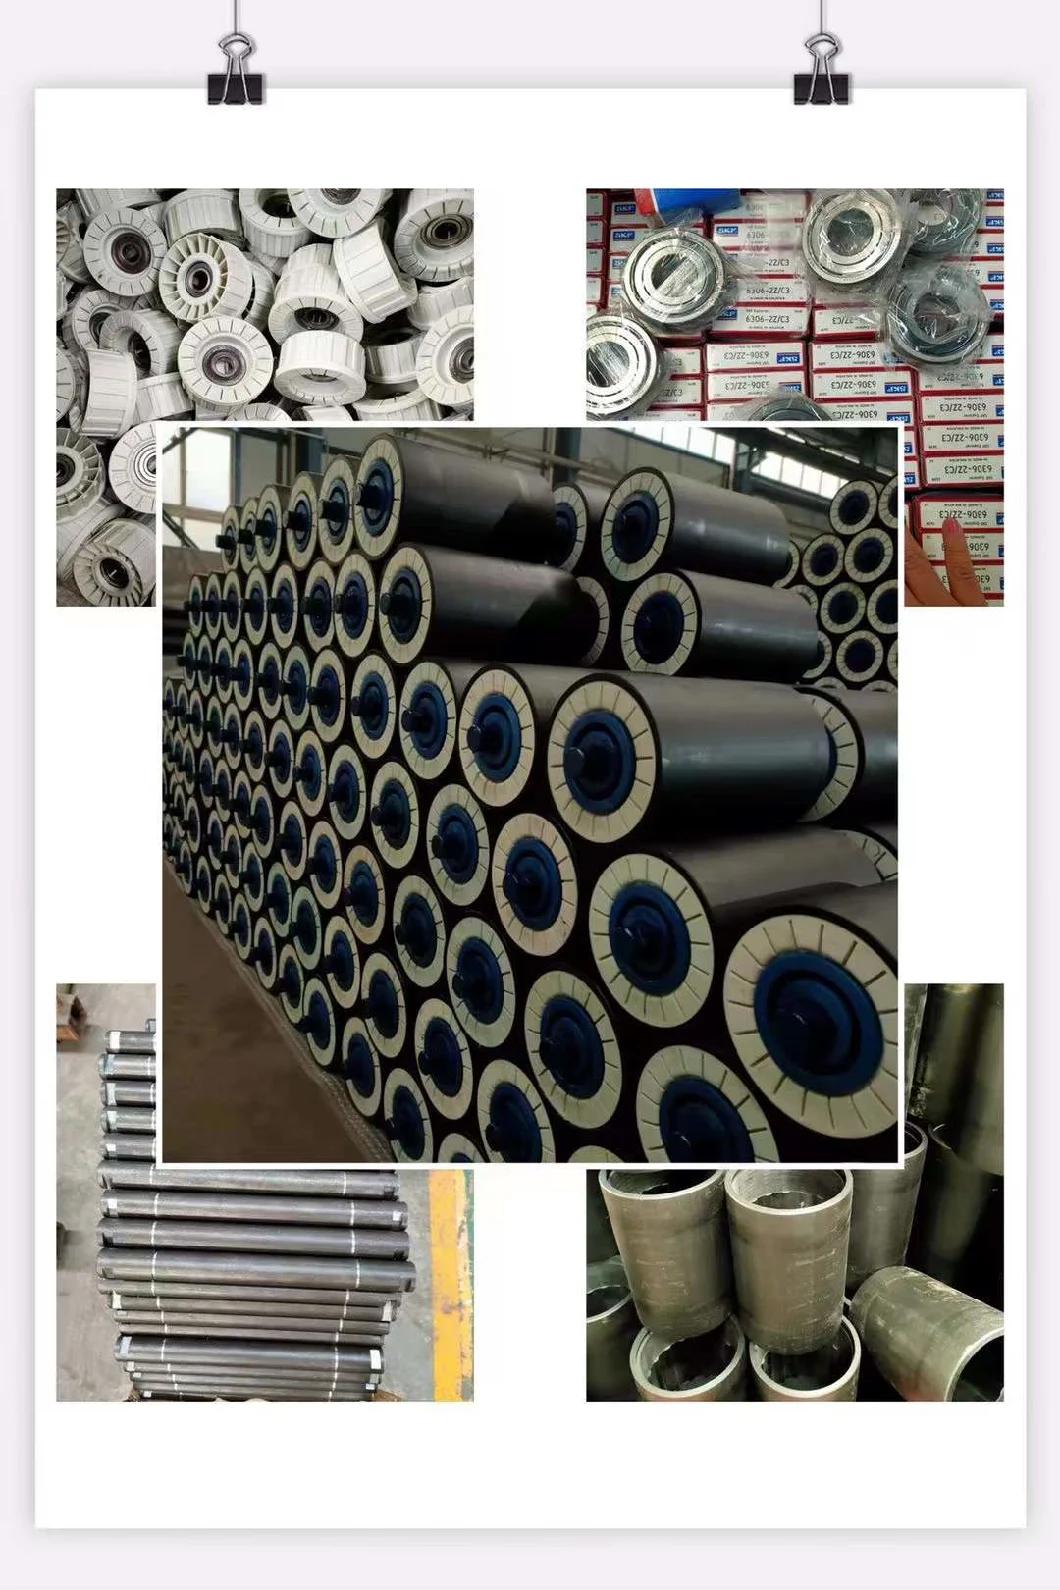 HDPE Conveyor Roller/ Plastic Roller/ PVC Roller